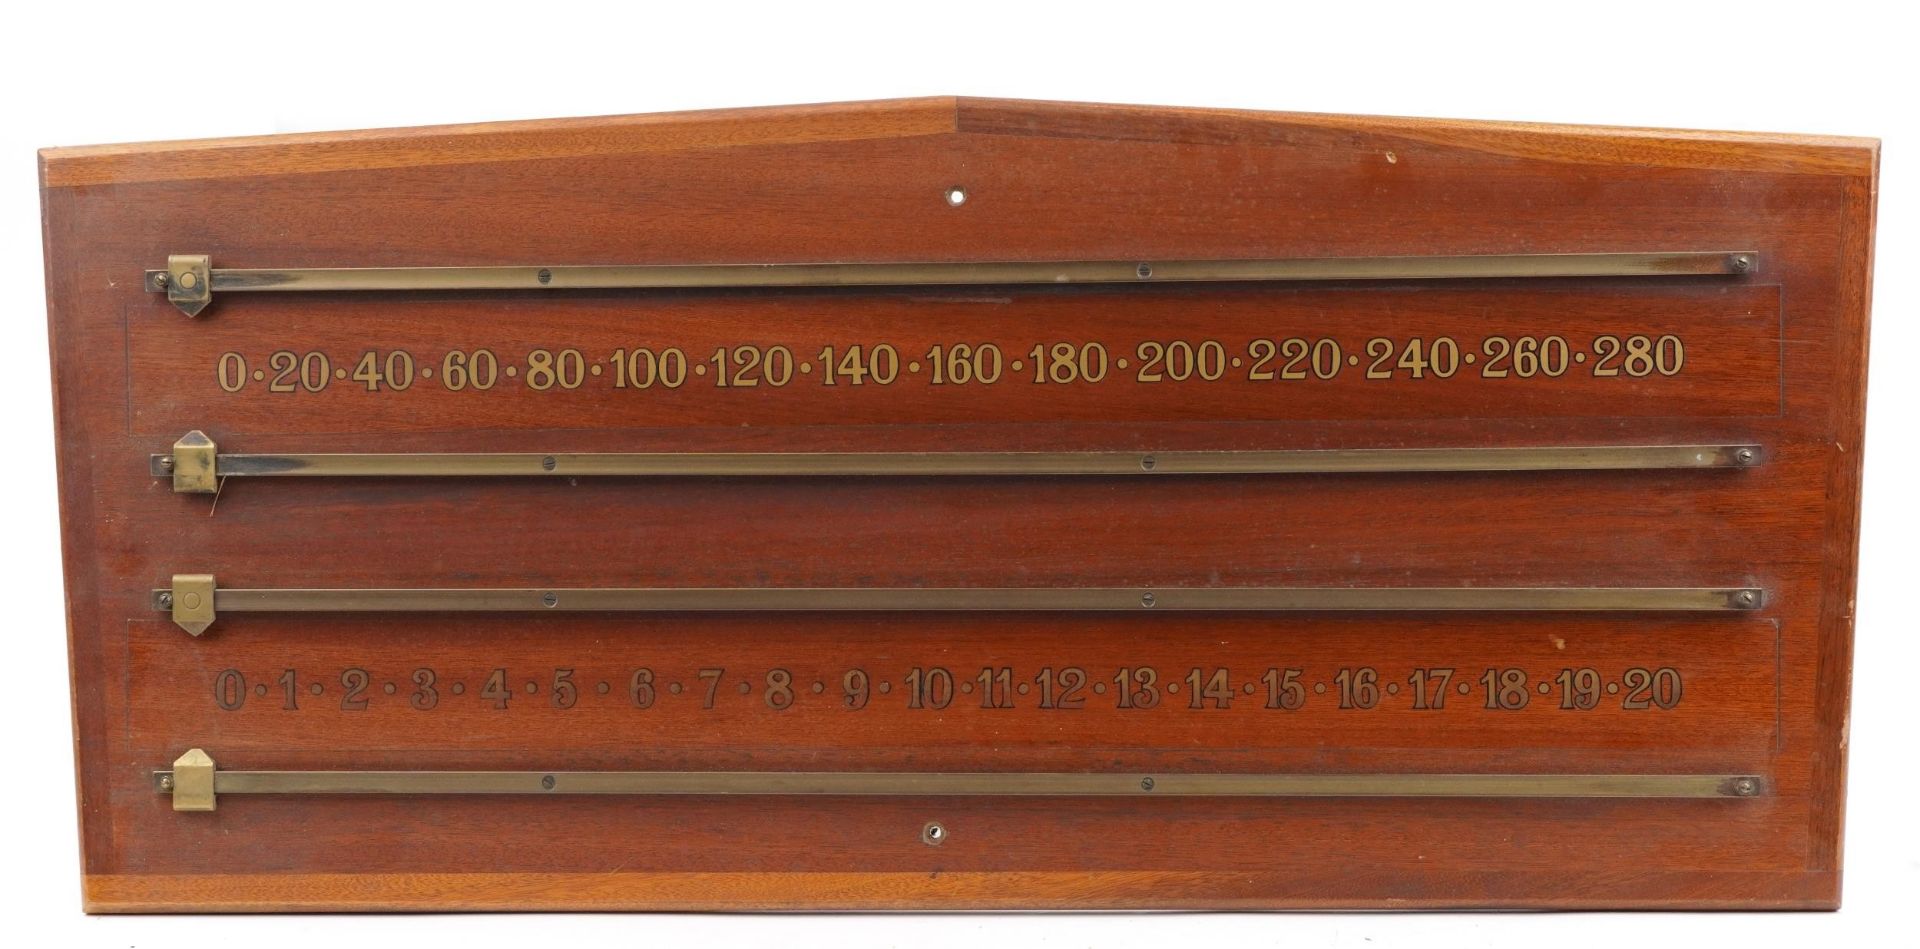 Mid 20th century mahogany snooker scoreboard with brass rails, 95cm x 43cm